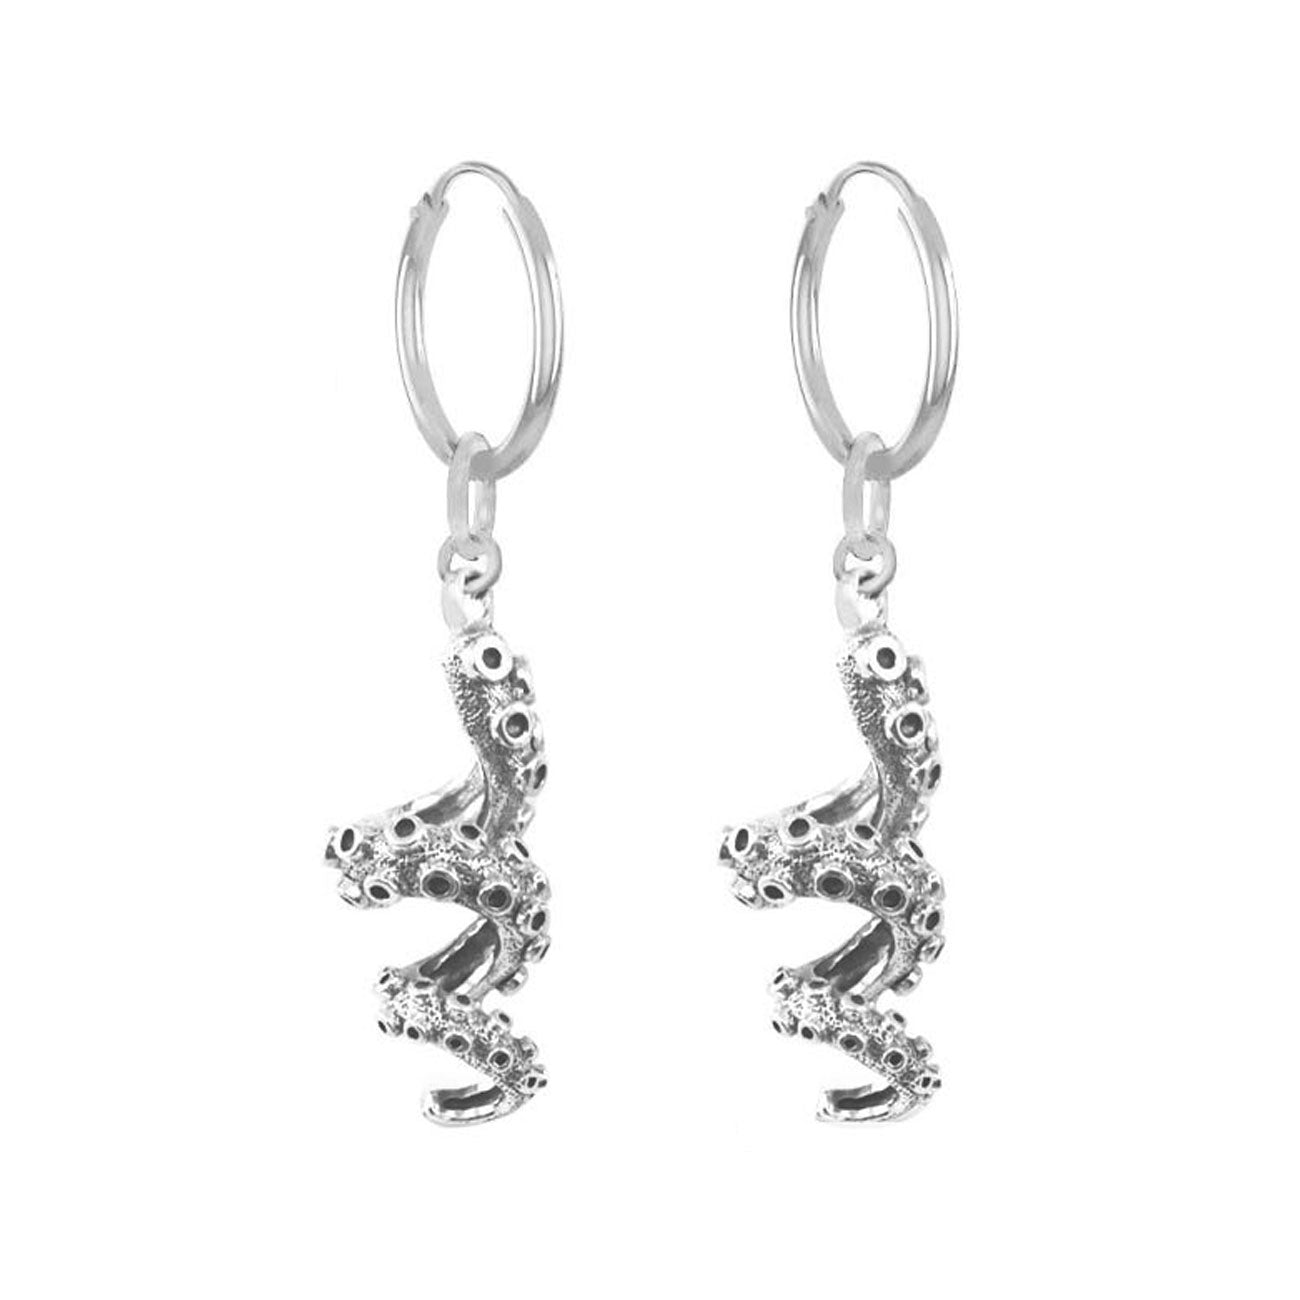 Octopus Sterling Silver Hook Earrings TER2014